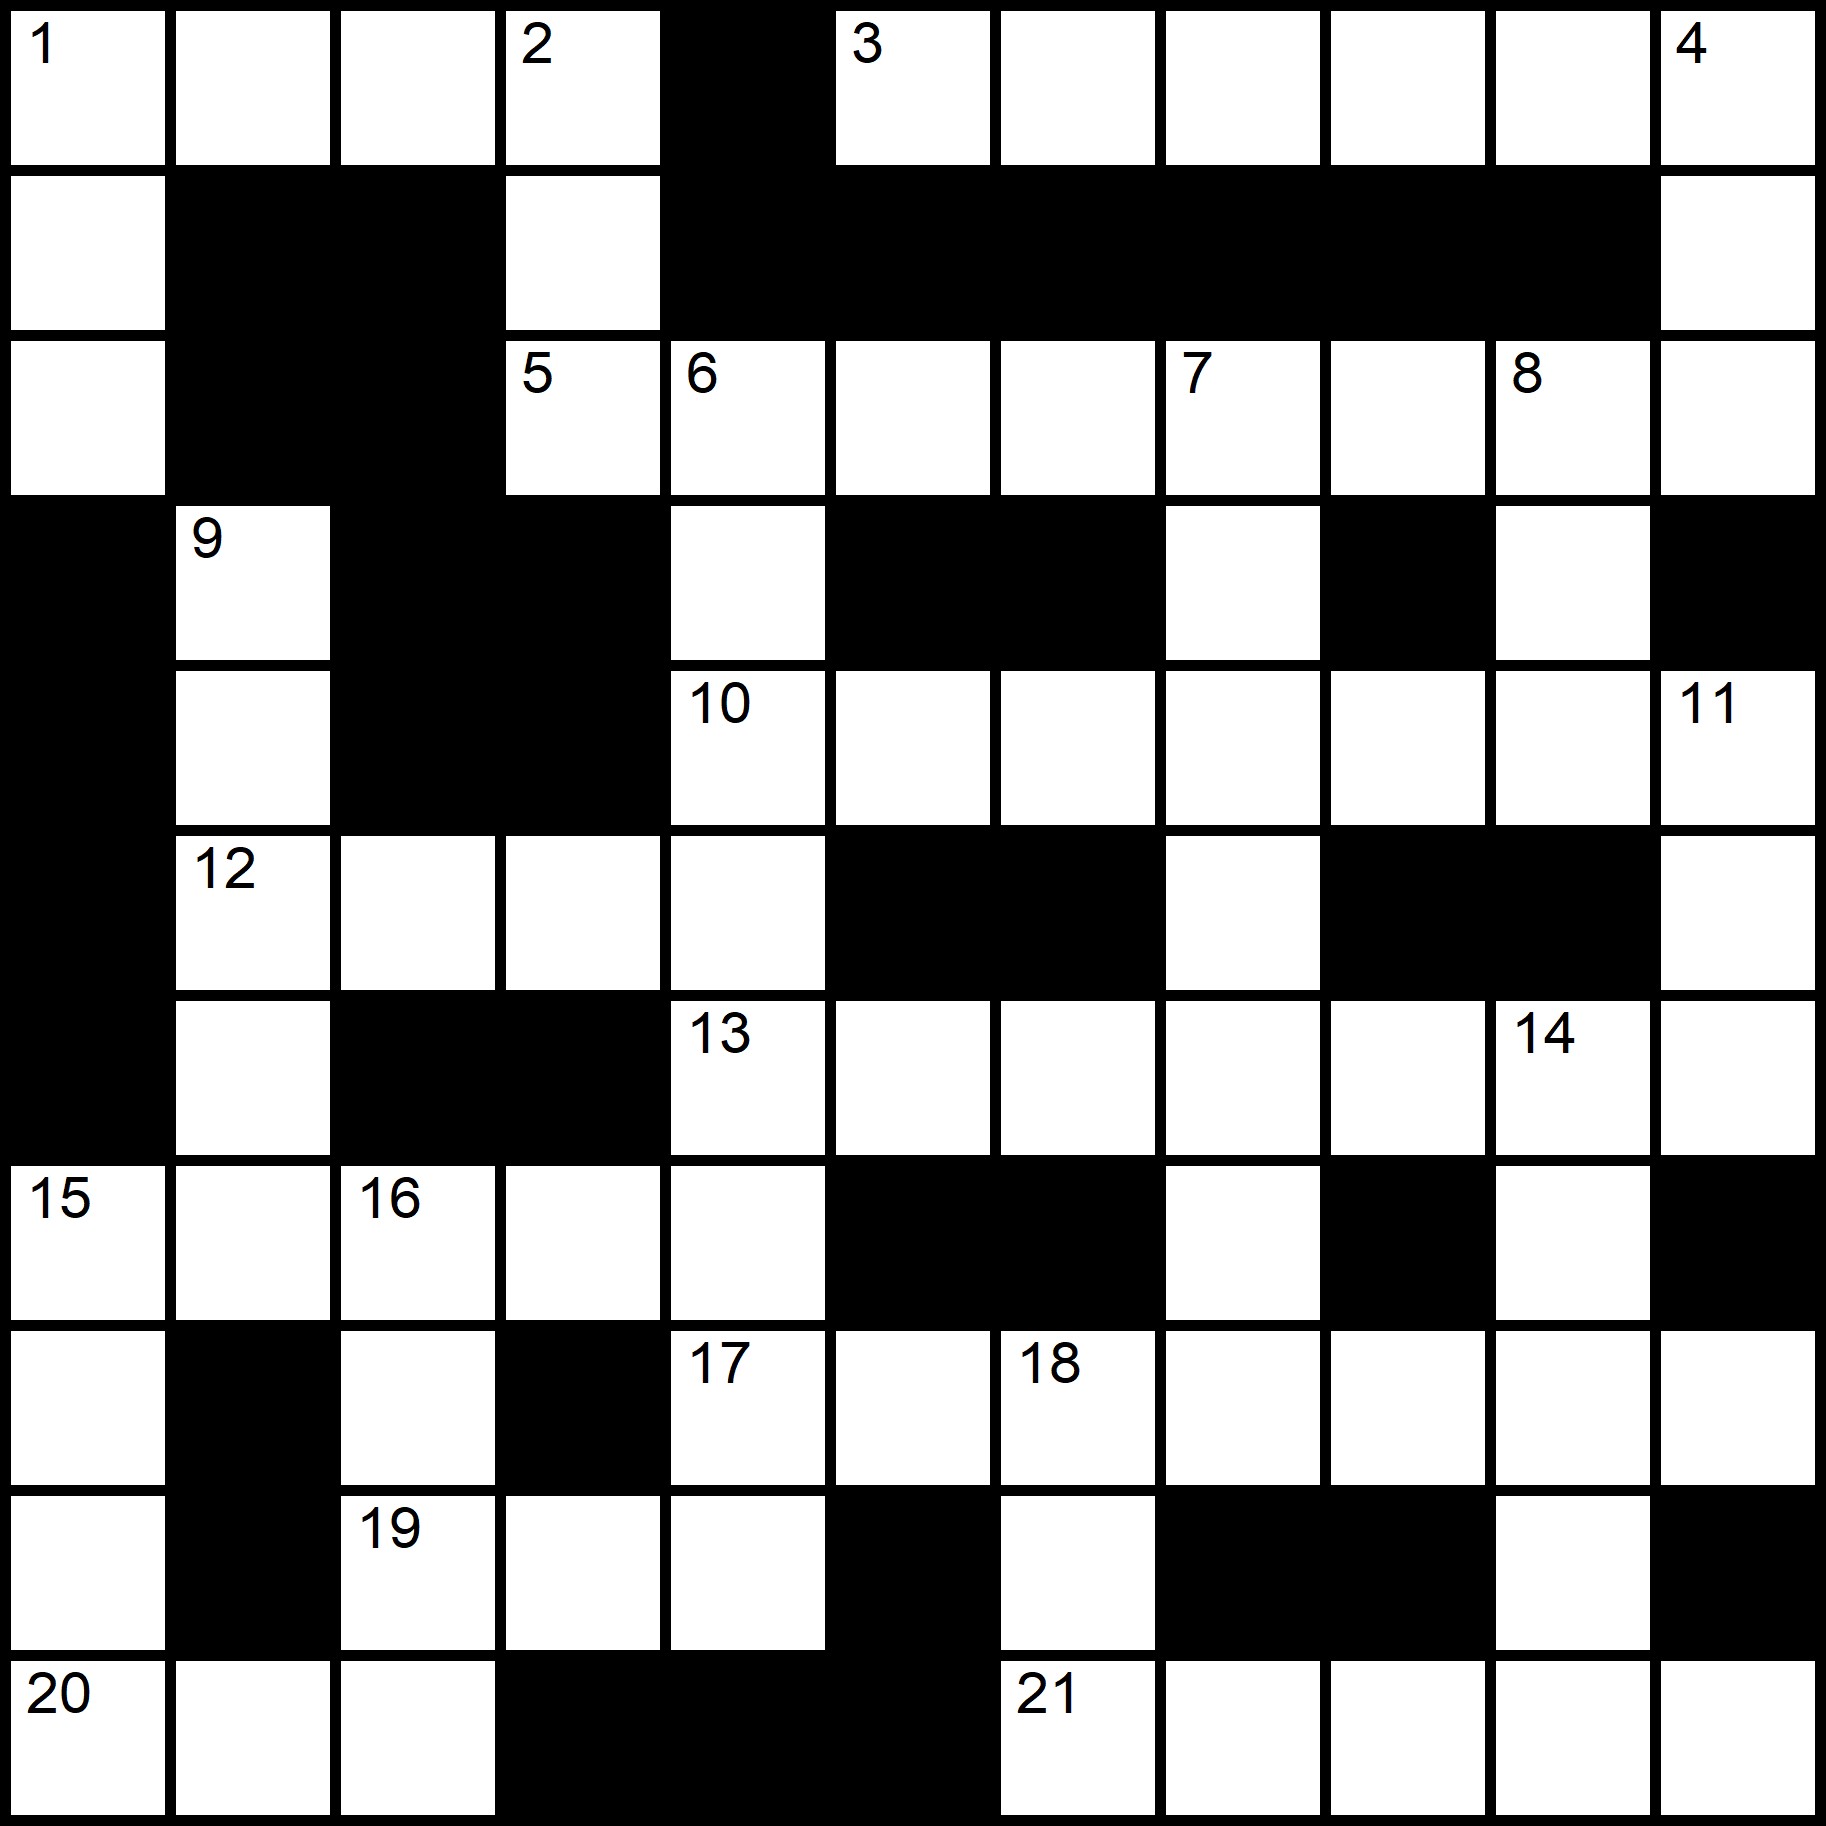 Easy Printable Crossword Puzzles -
Placidus Flora - Crossword number two